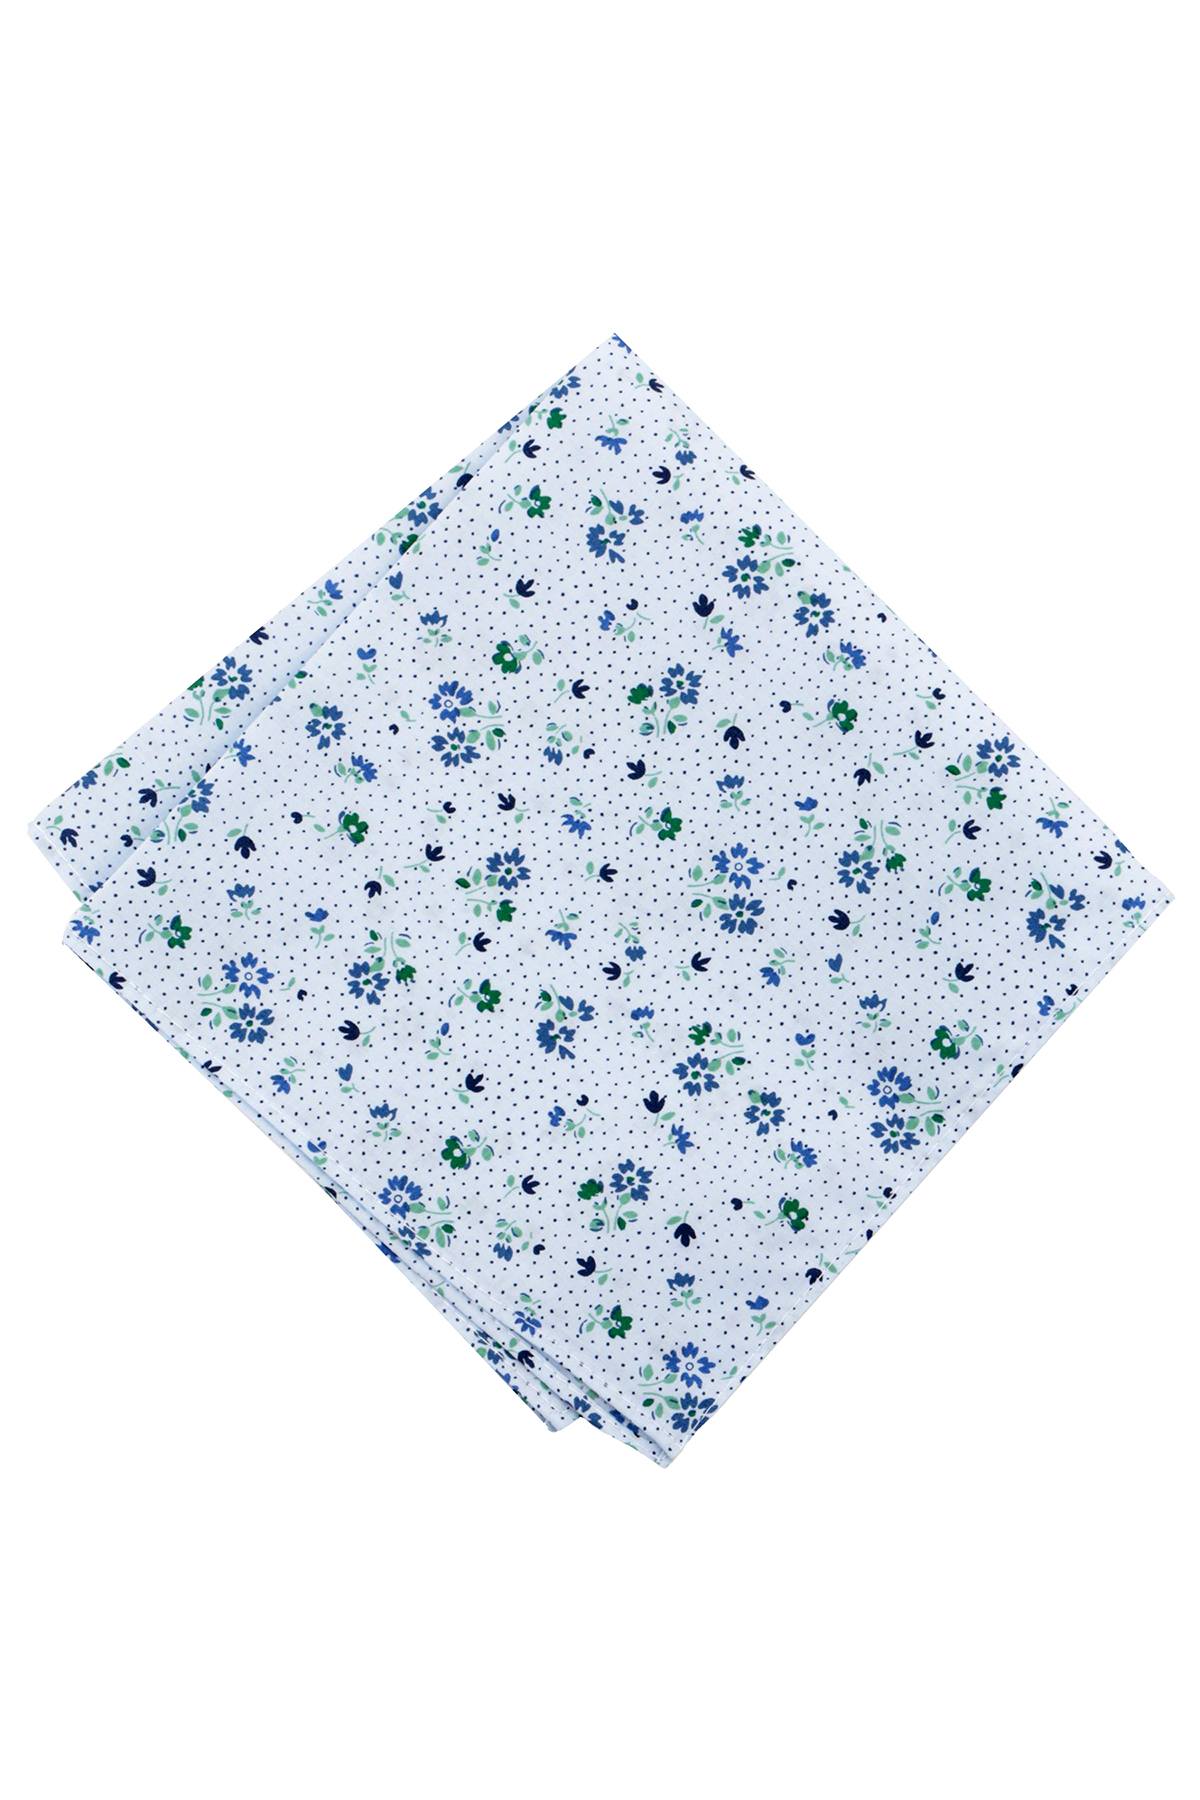 BAR III Blue/Green Scattered-Dot/Floral Cotton Pocket Square